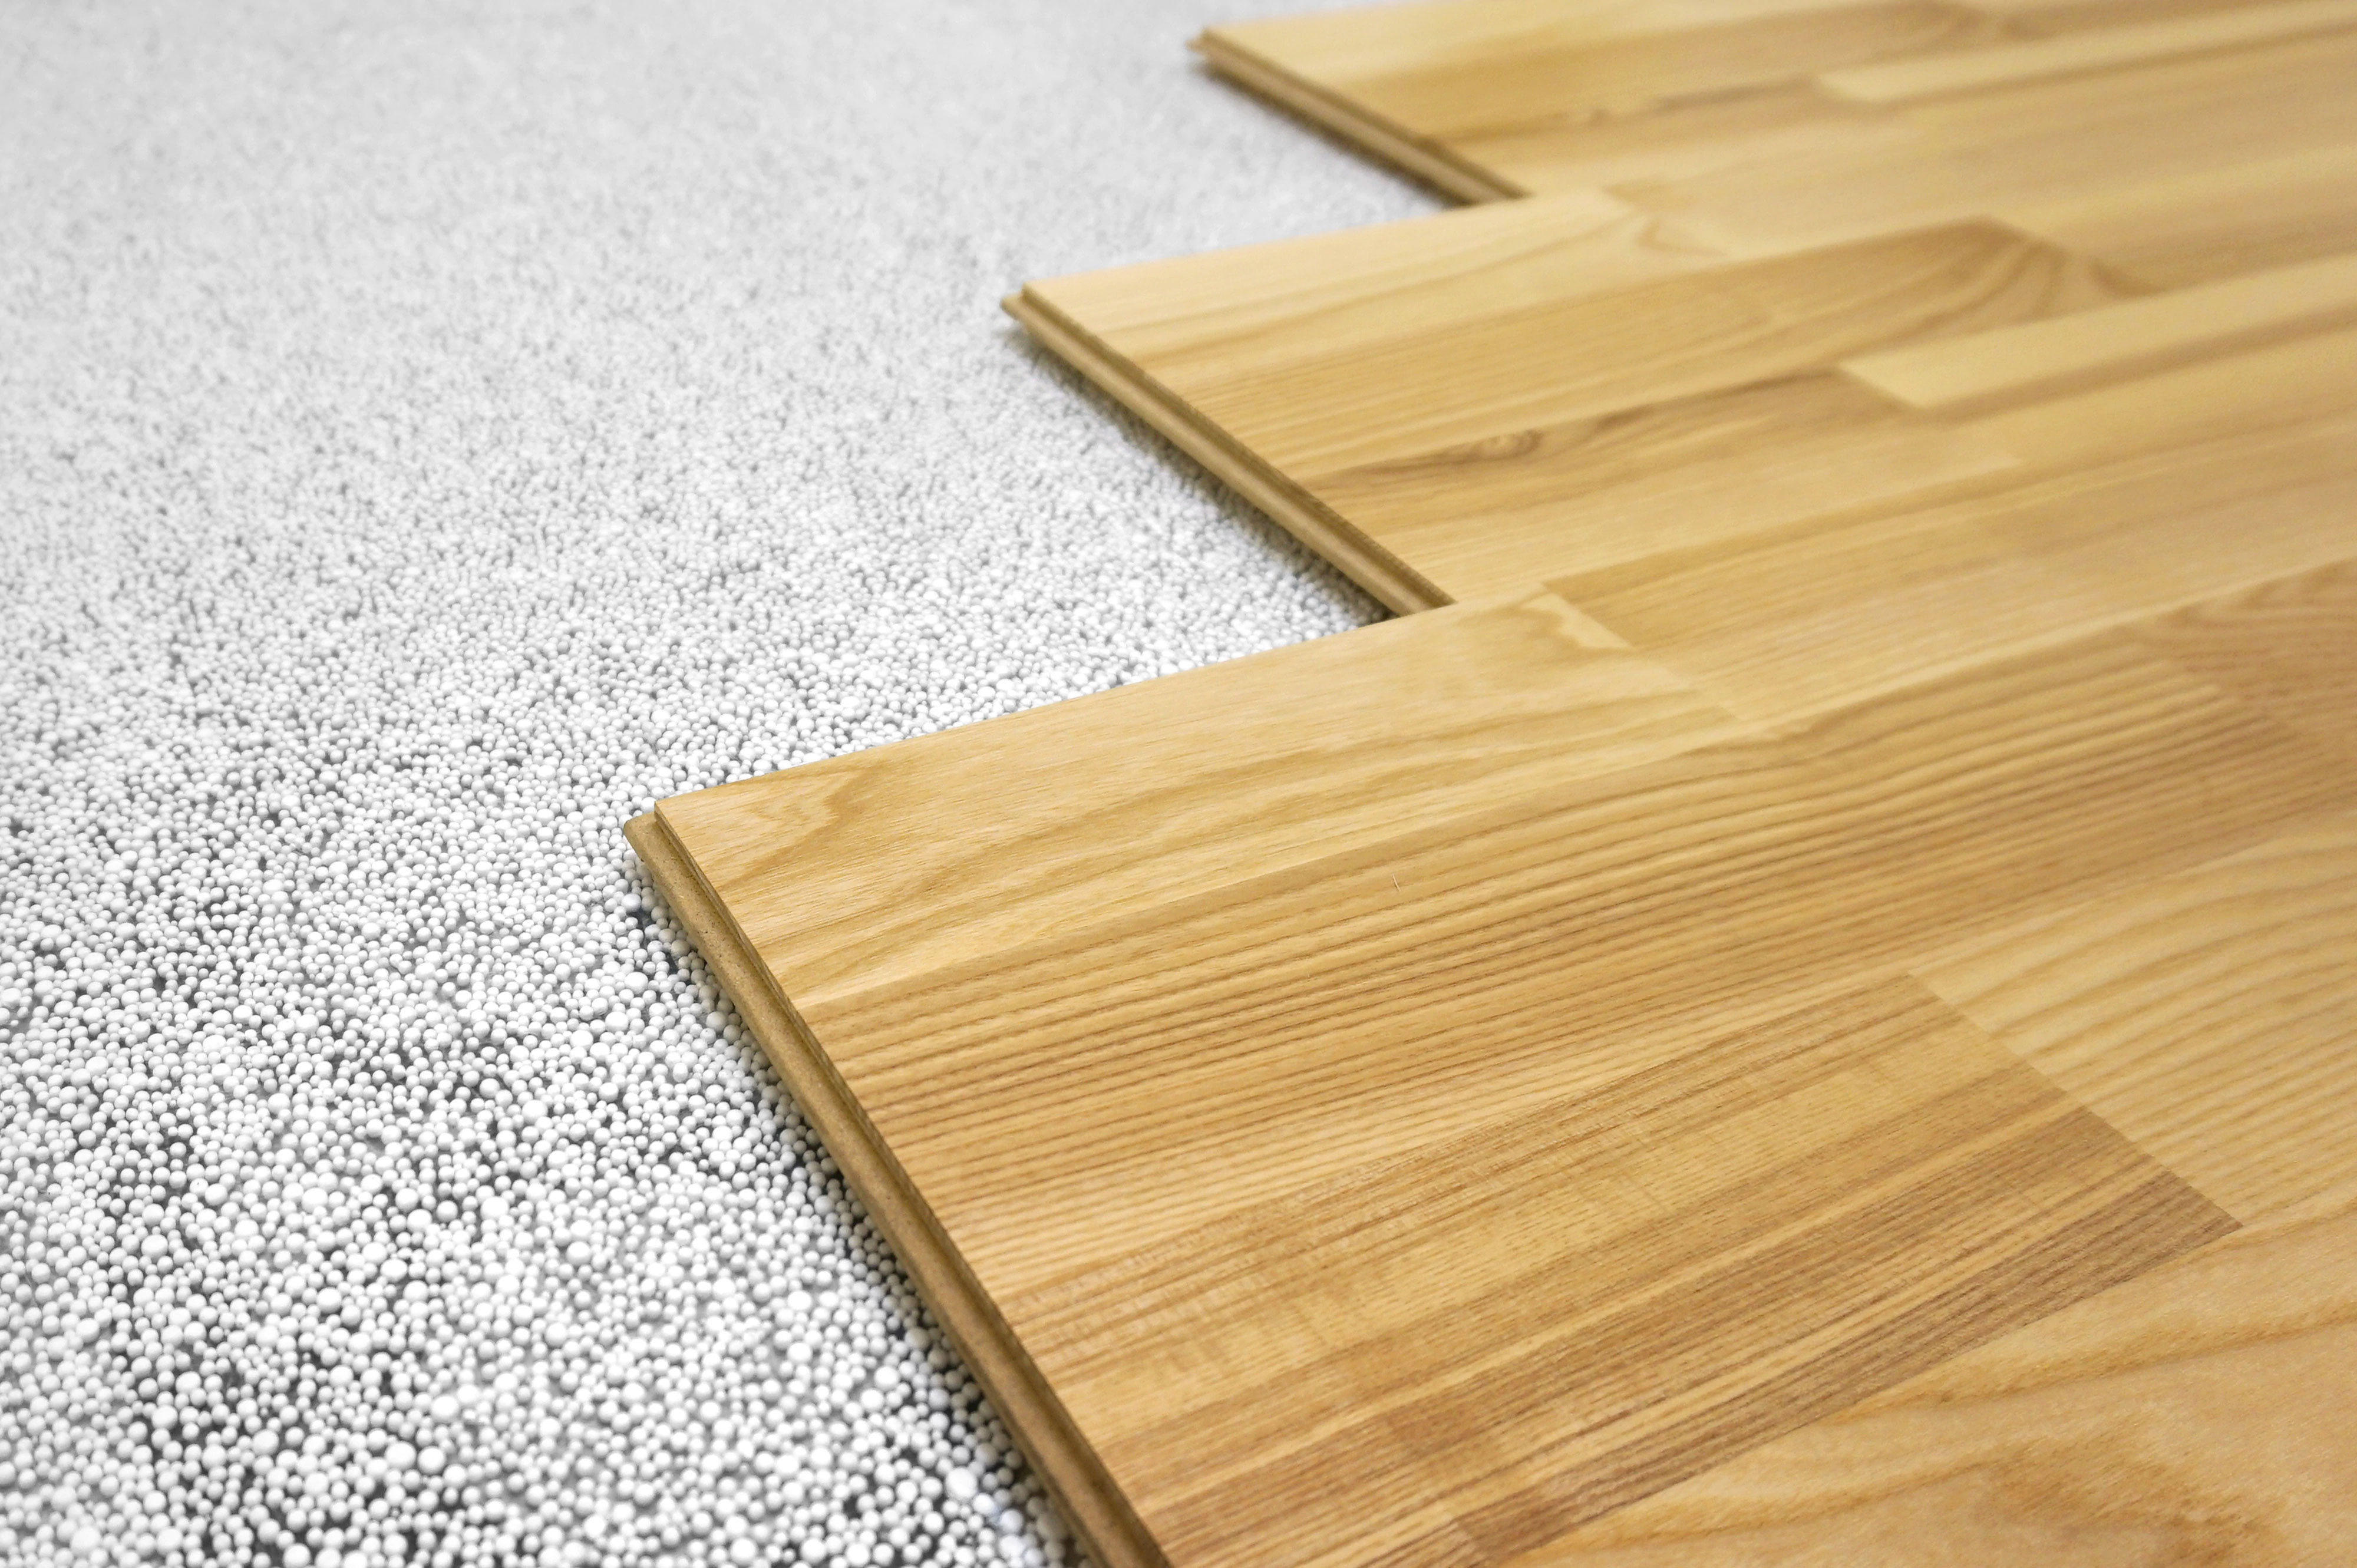 hardwood flooring las vegas nv of what does it cost to install laminate flooring angies list regarding wood lam